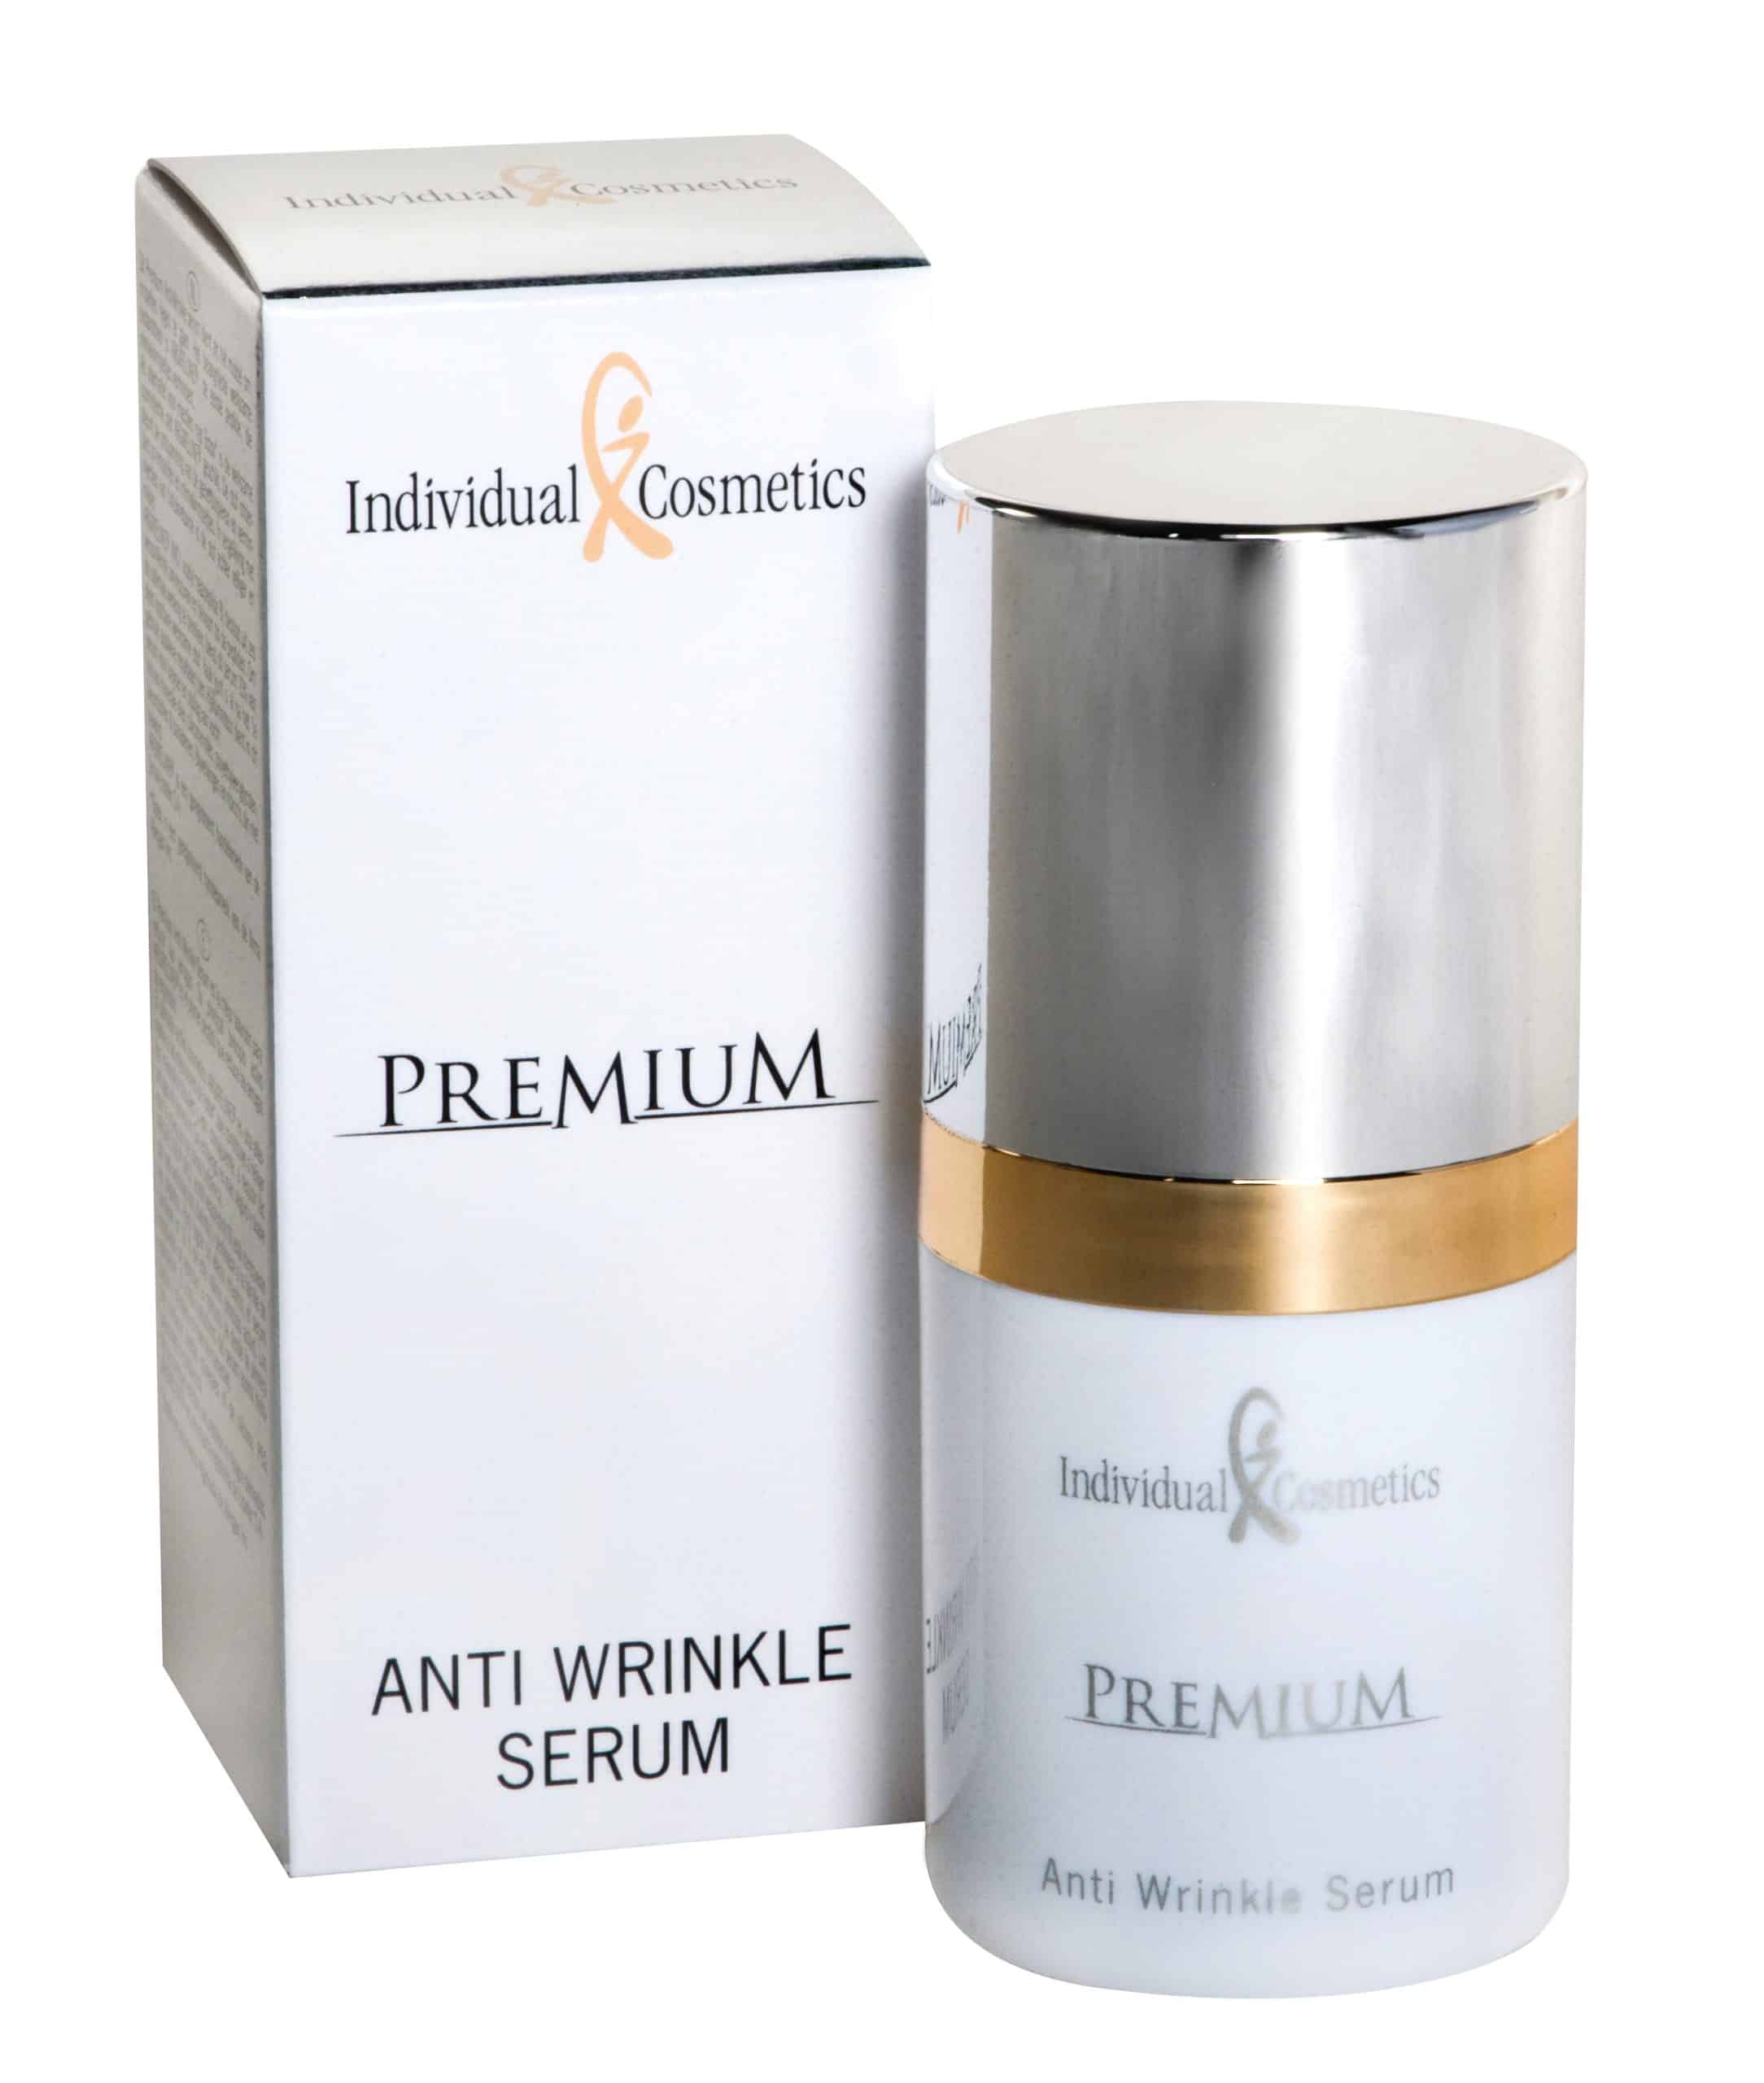 Individual Cosmetics PREMIUM Anti Wrinkle Serum